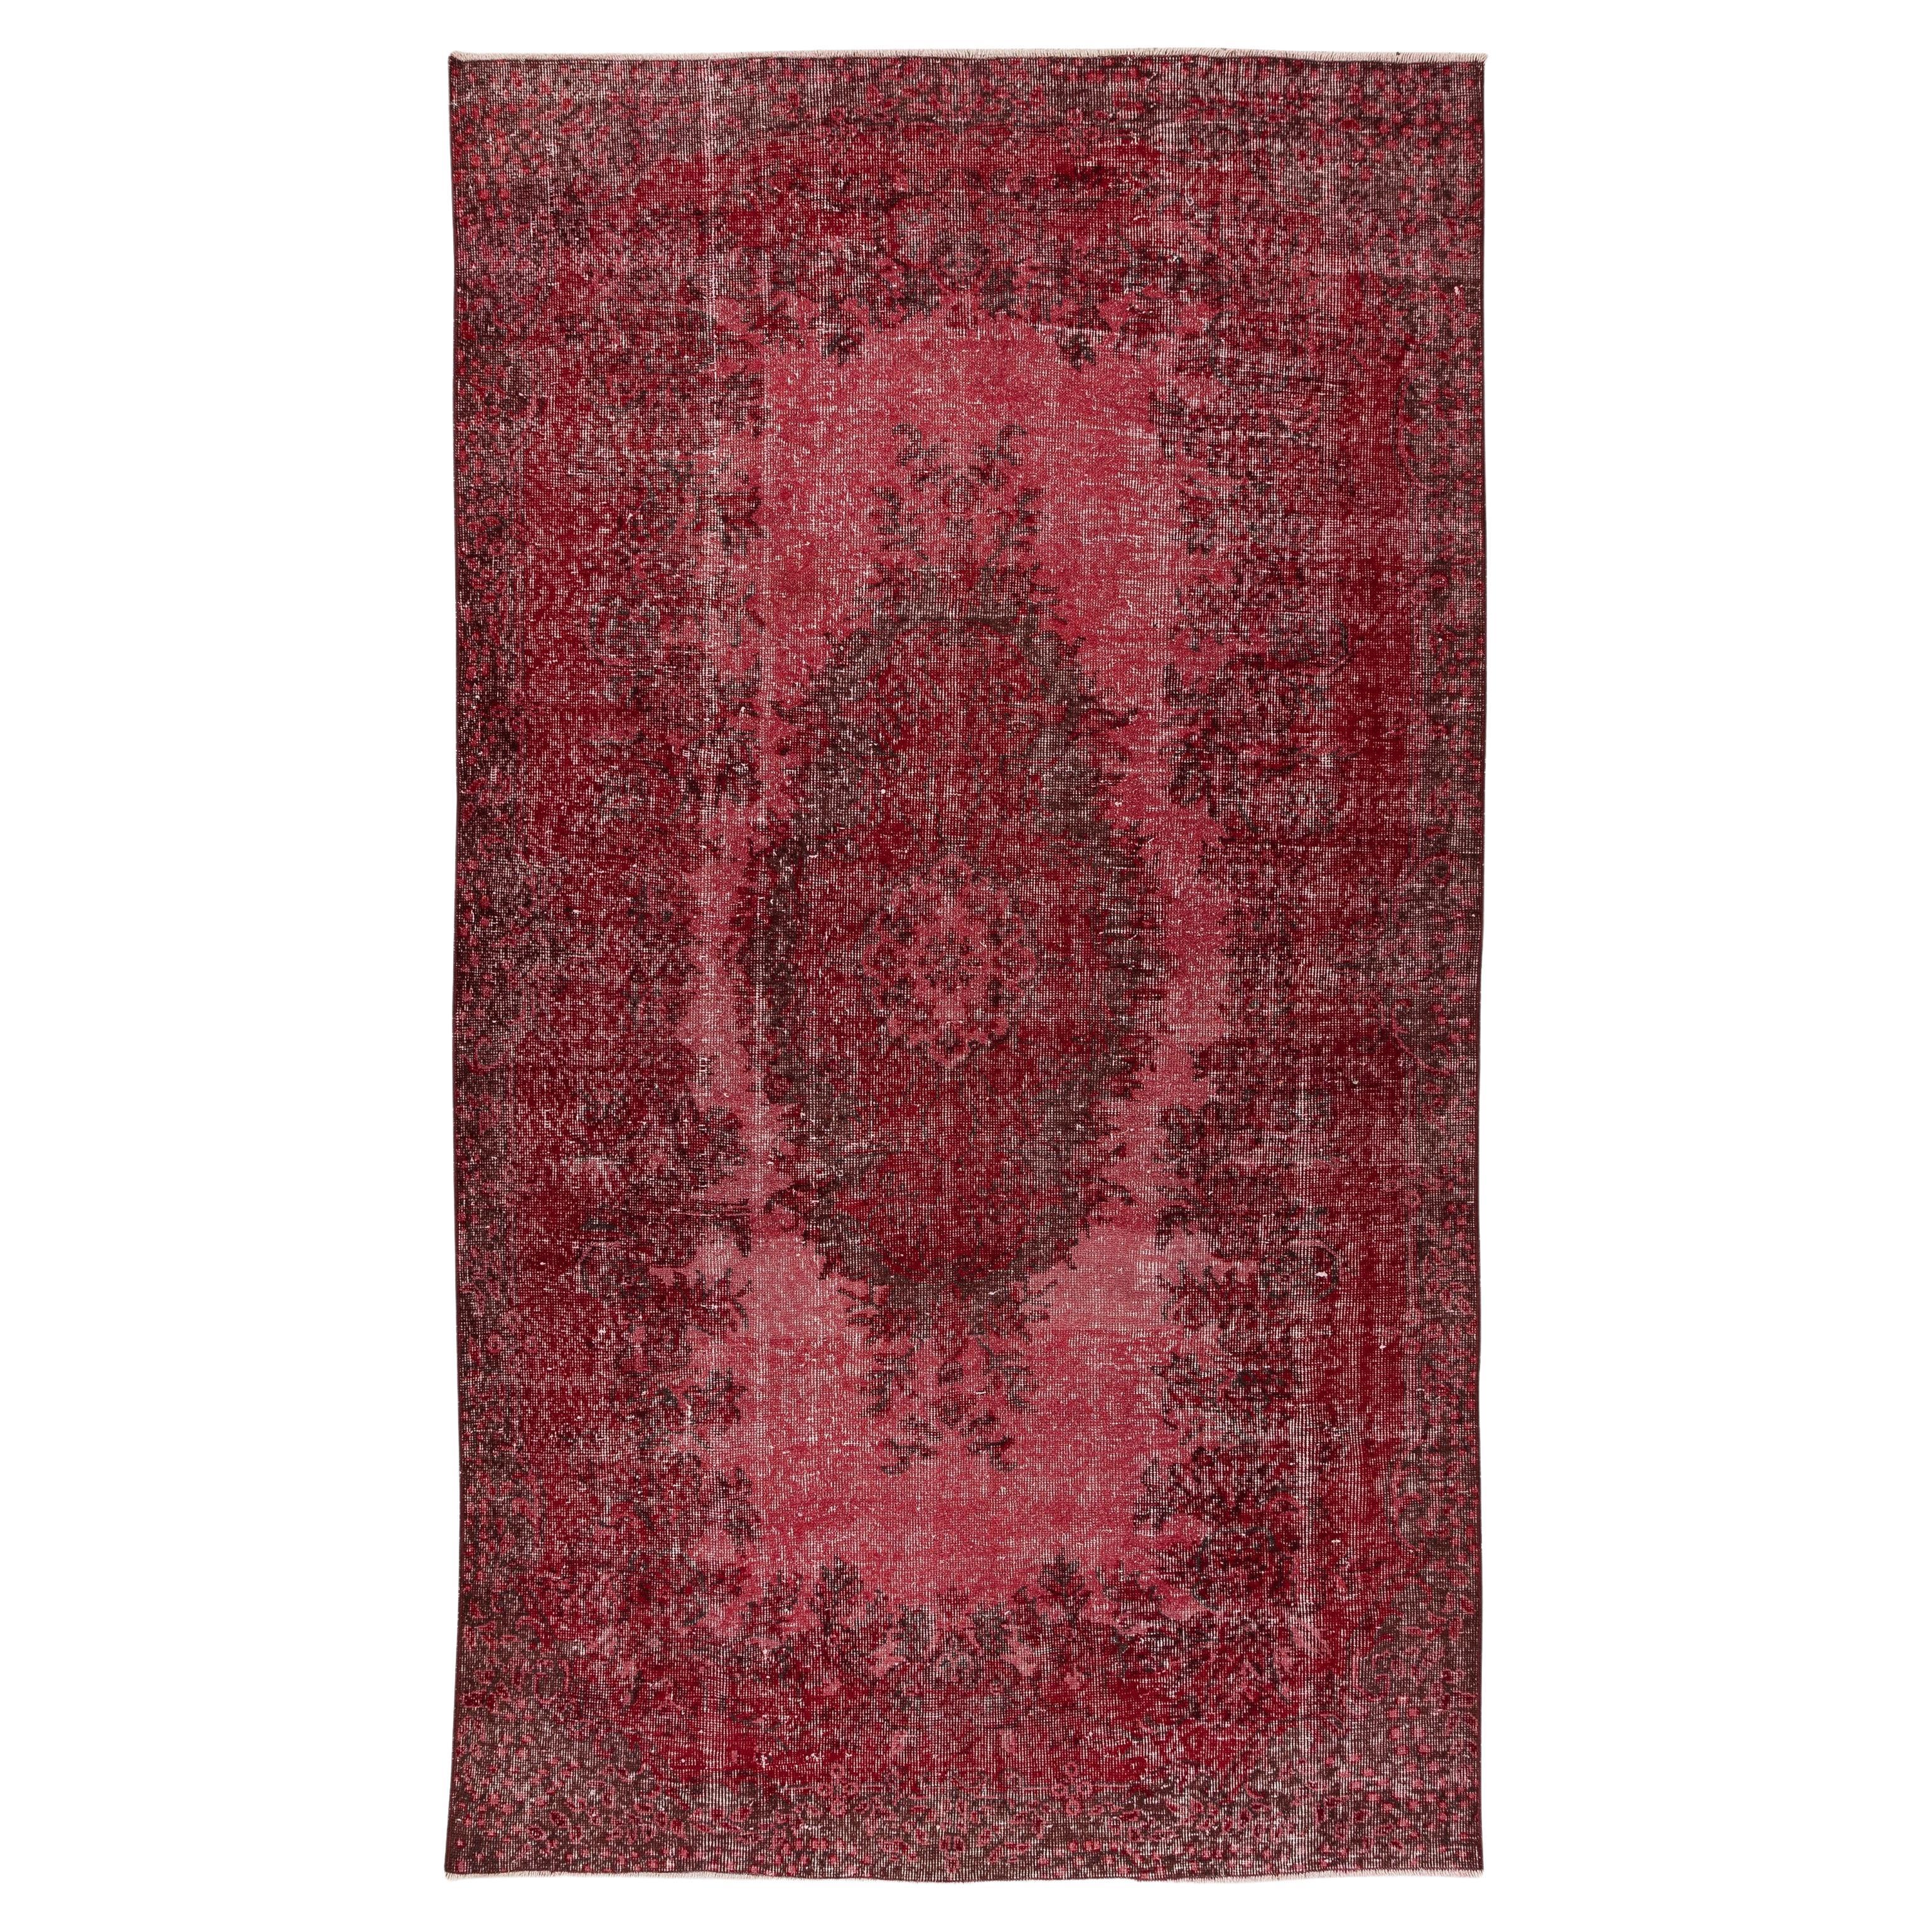 5.4x9.4 Ft Red Area Rug from Turkey, Handmade Floral Medallion Design Carpet For Sale